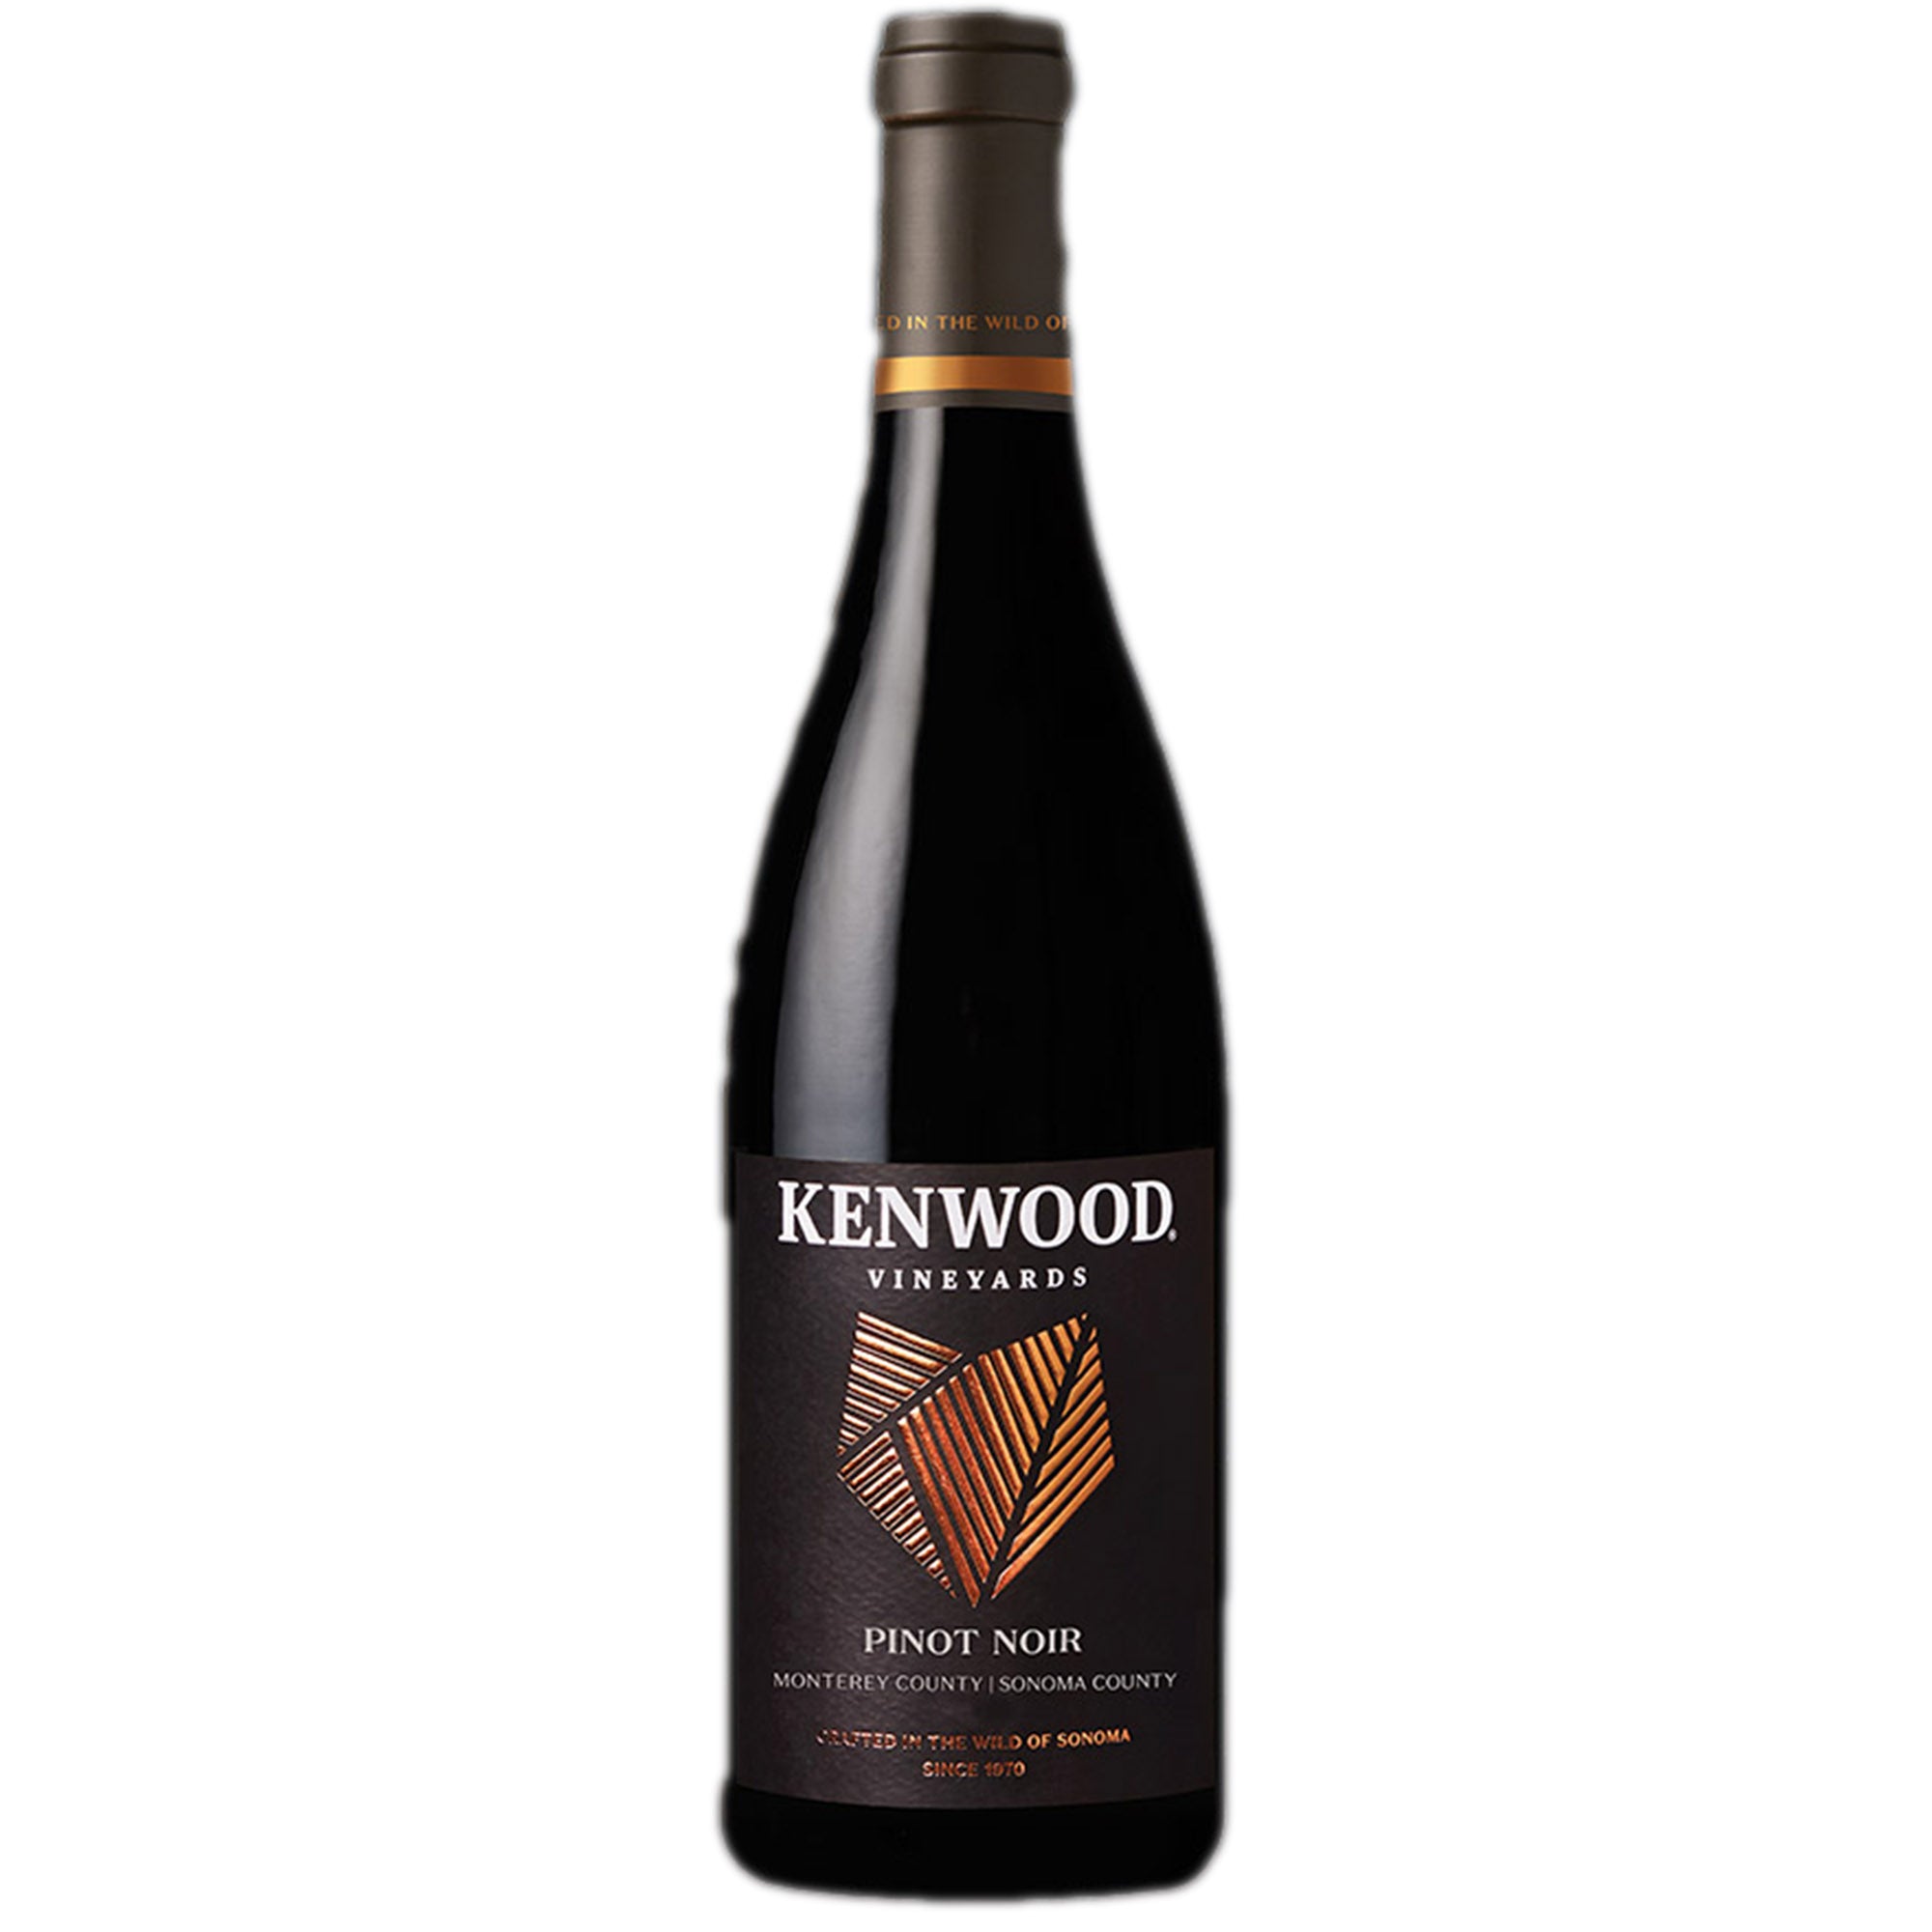 Kenwood Vineyards Monterey County Pinot Noir